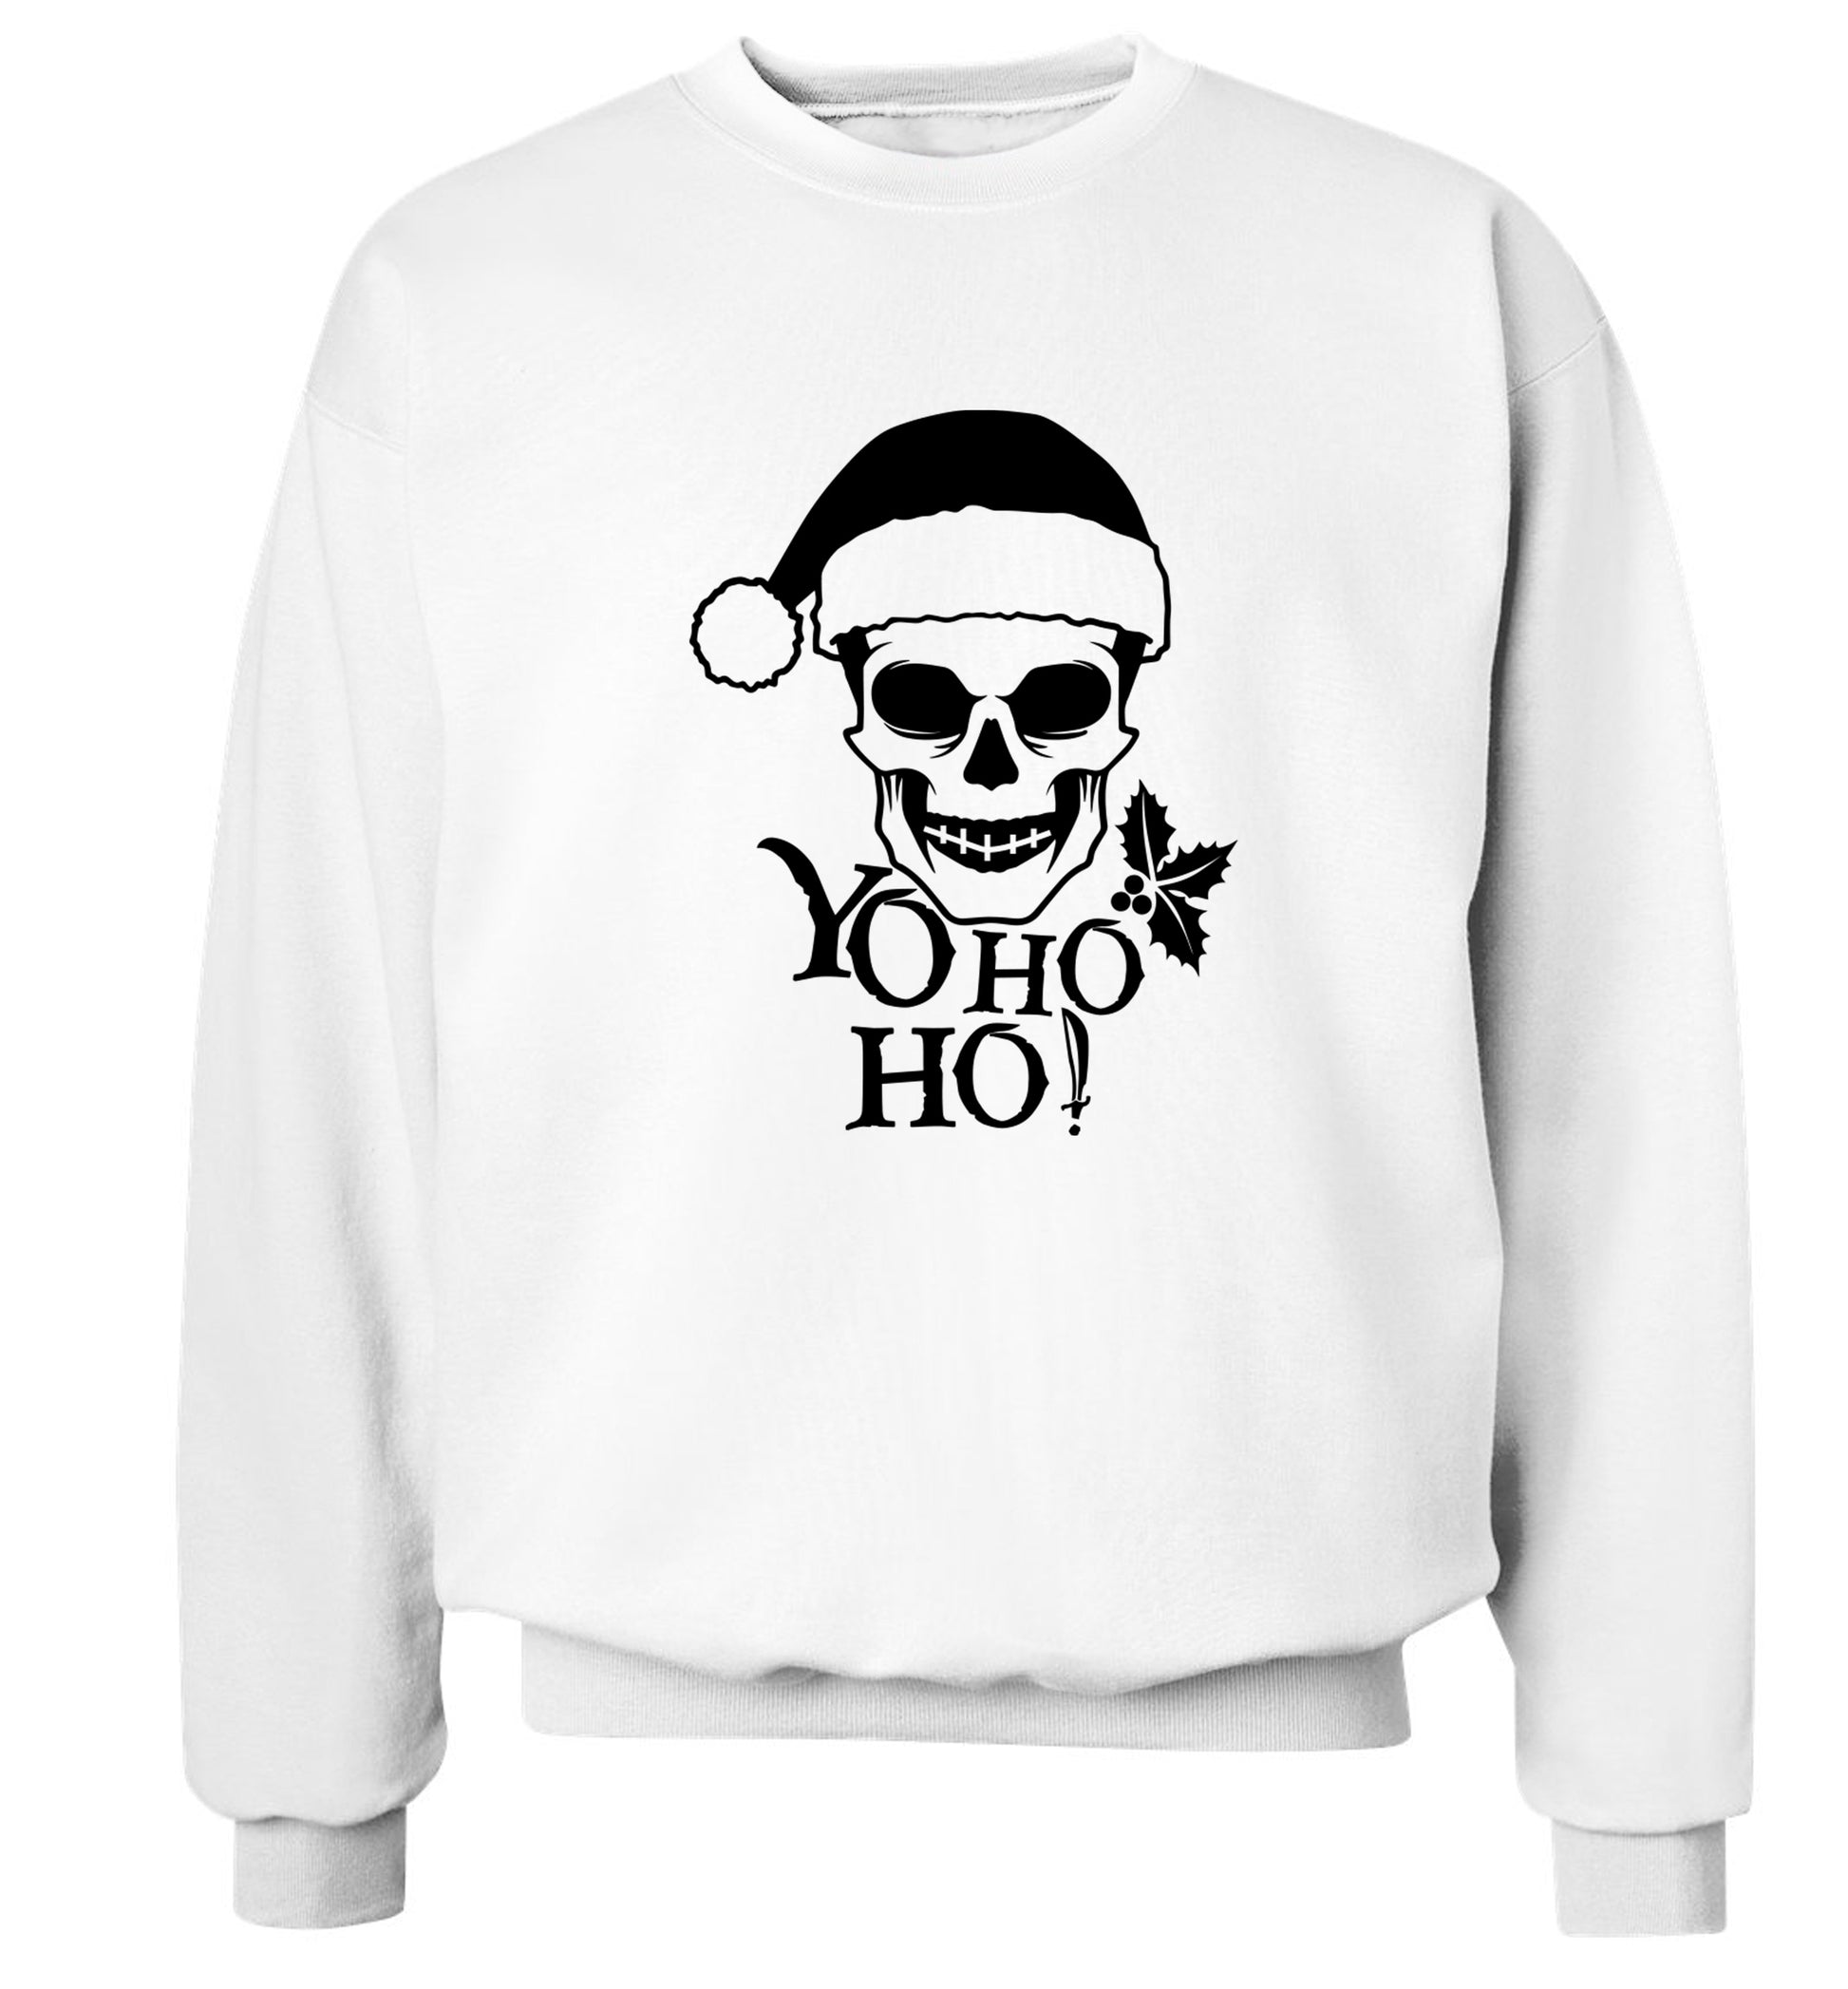 Yo ho ho! Adult's unisex white Sweater 2XL